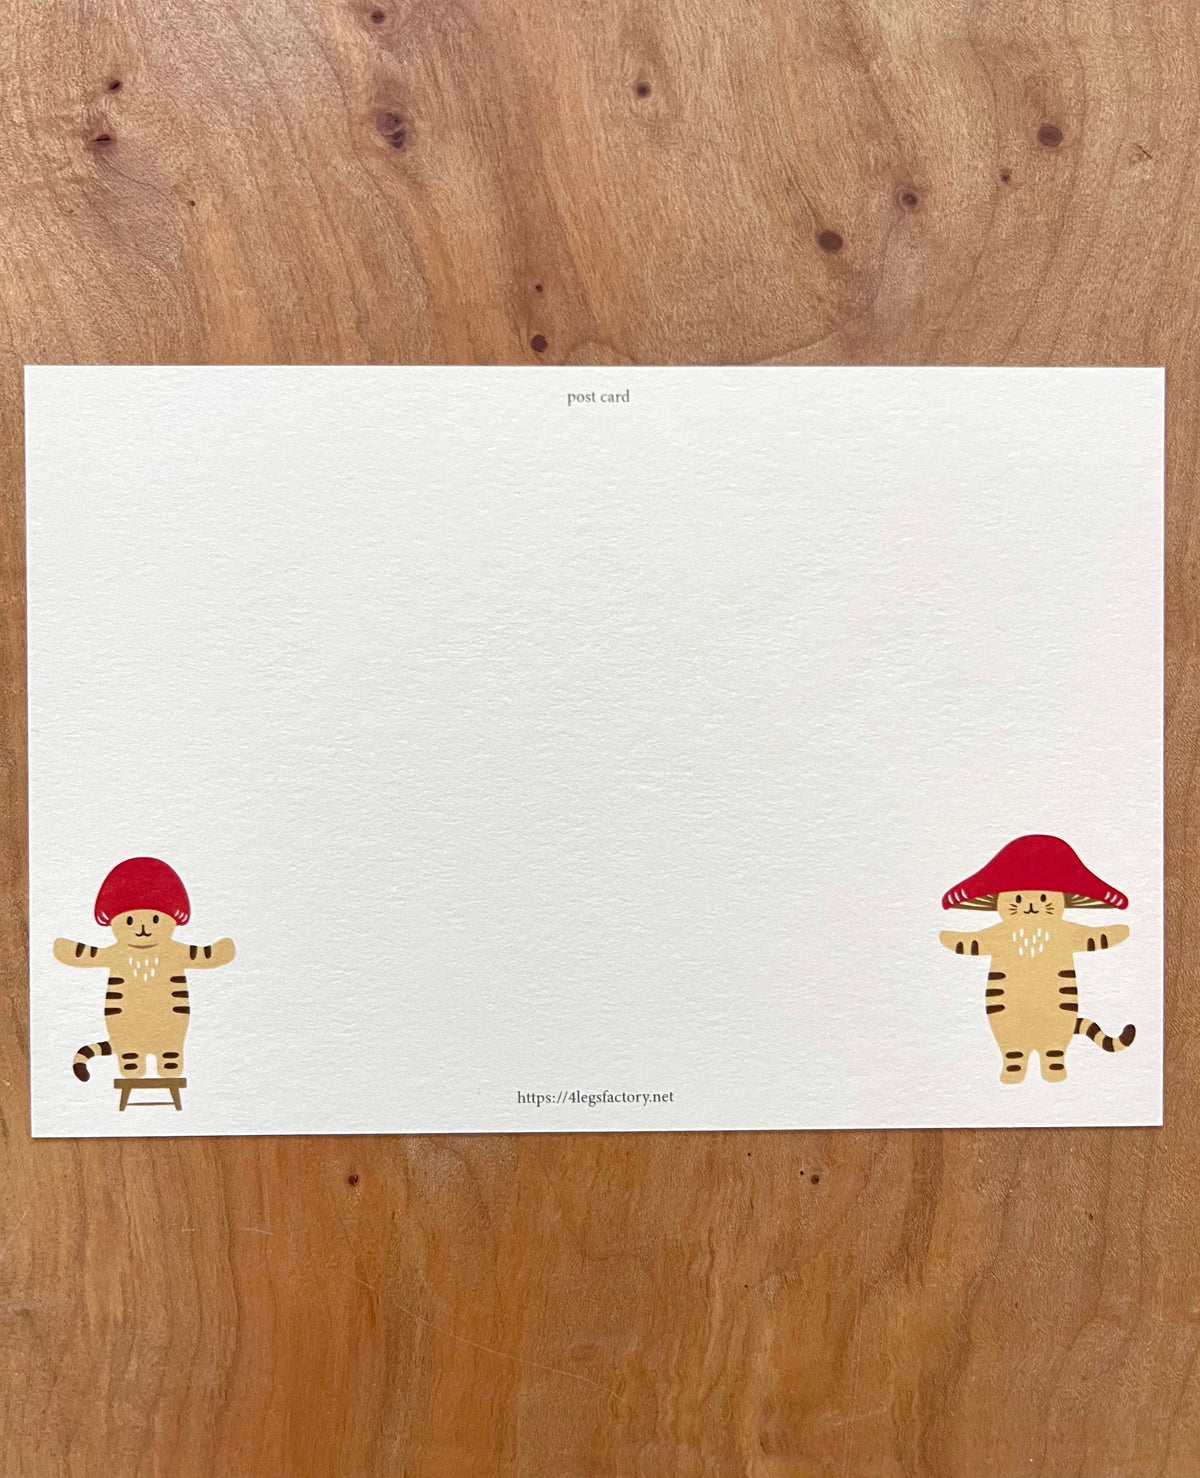 mushroom cat: Connection